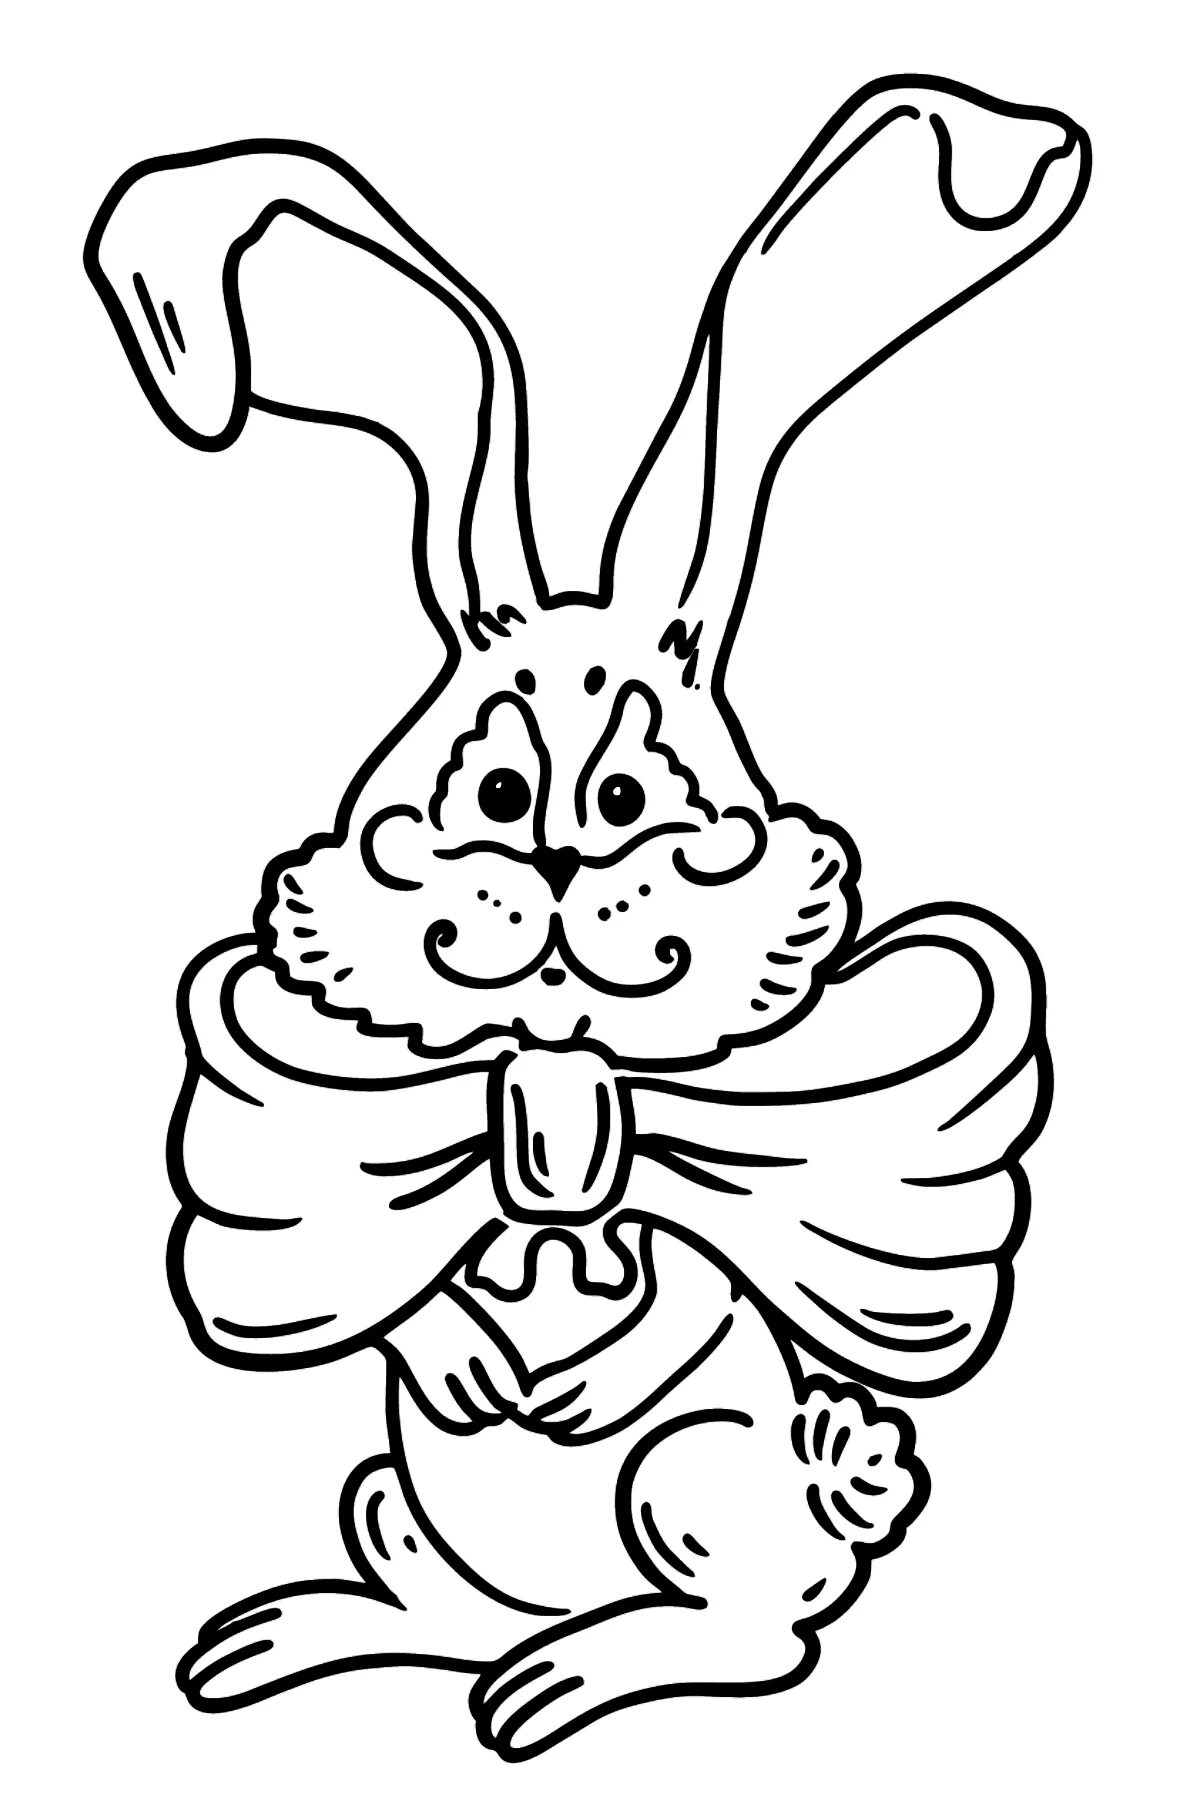 Bunny with a bow #1